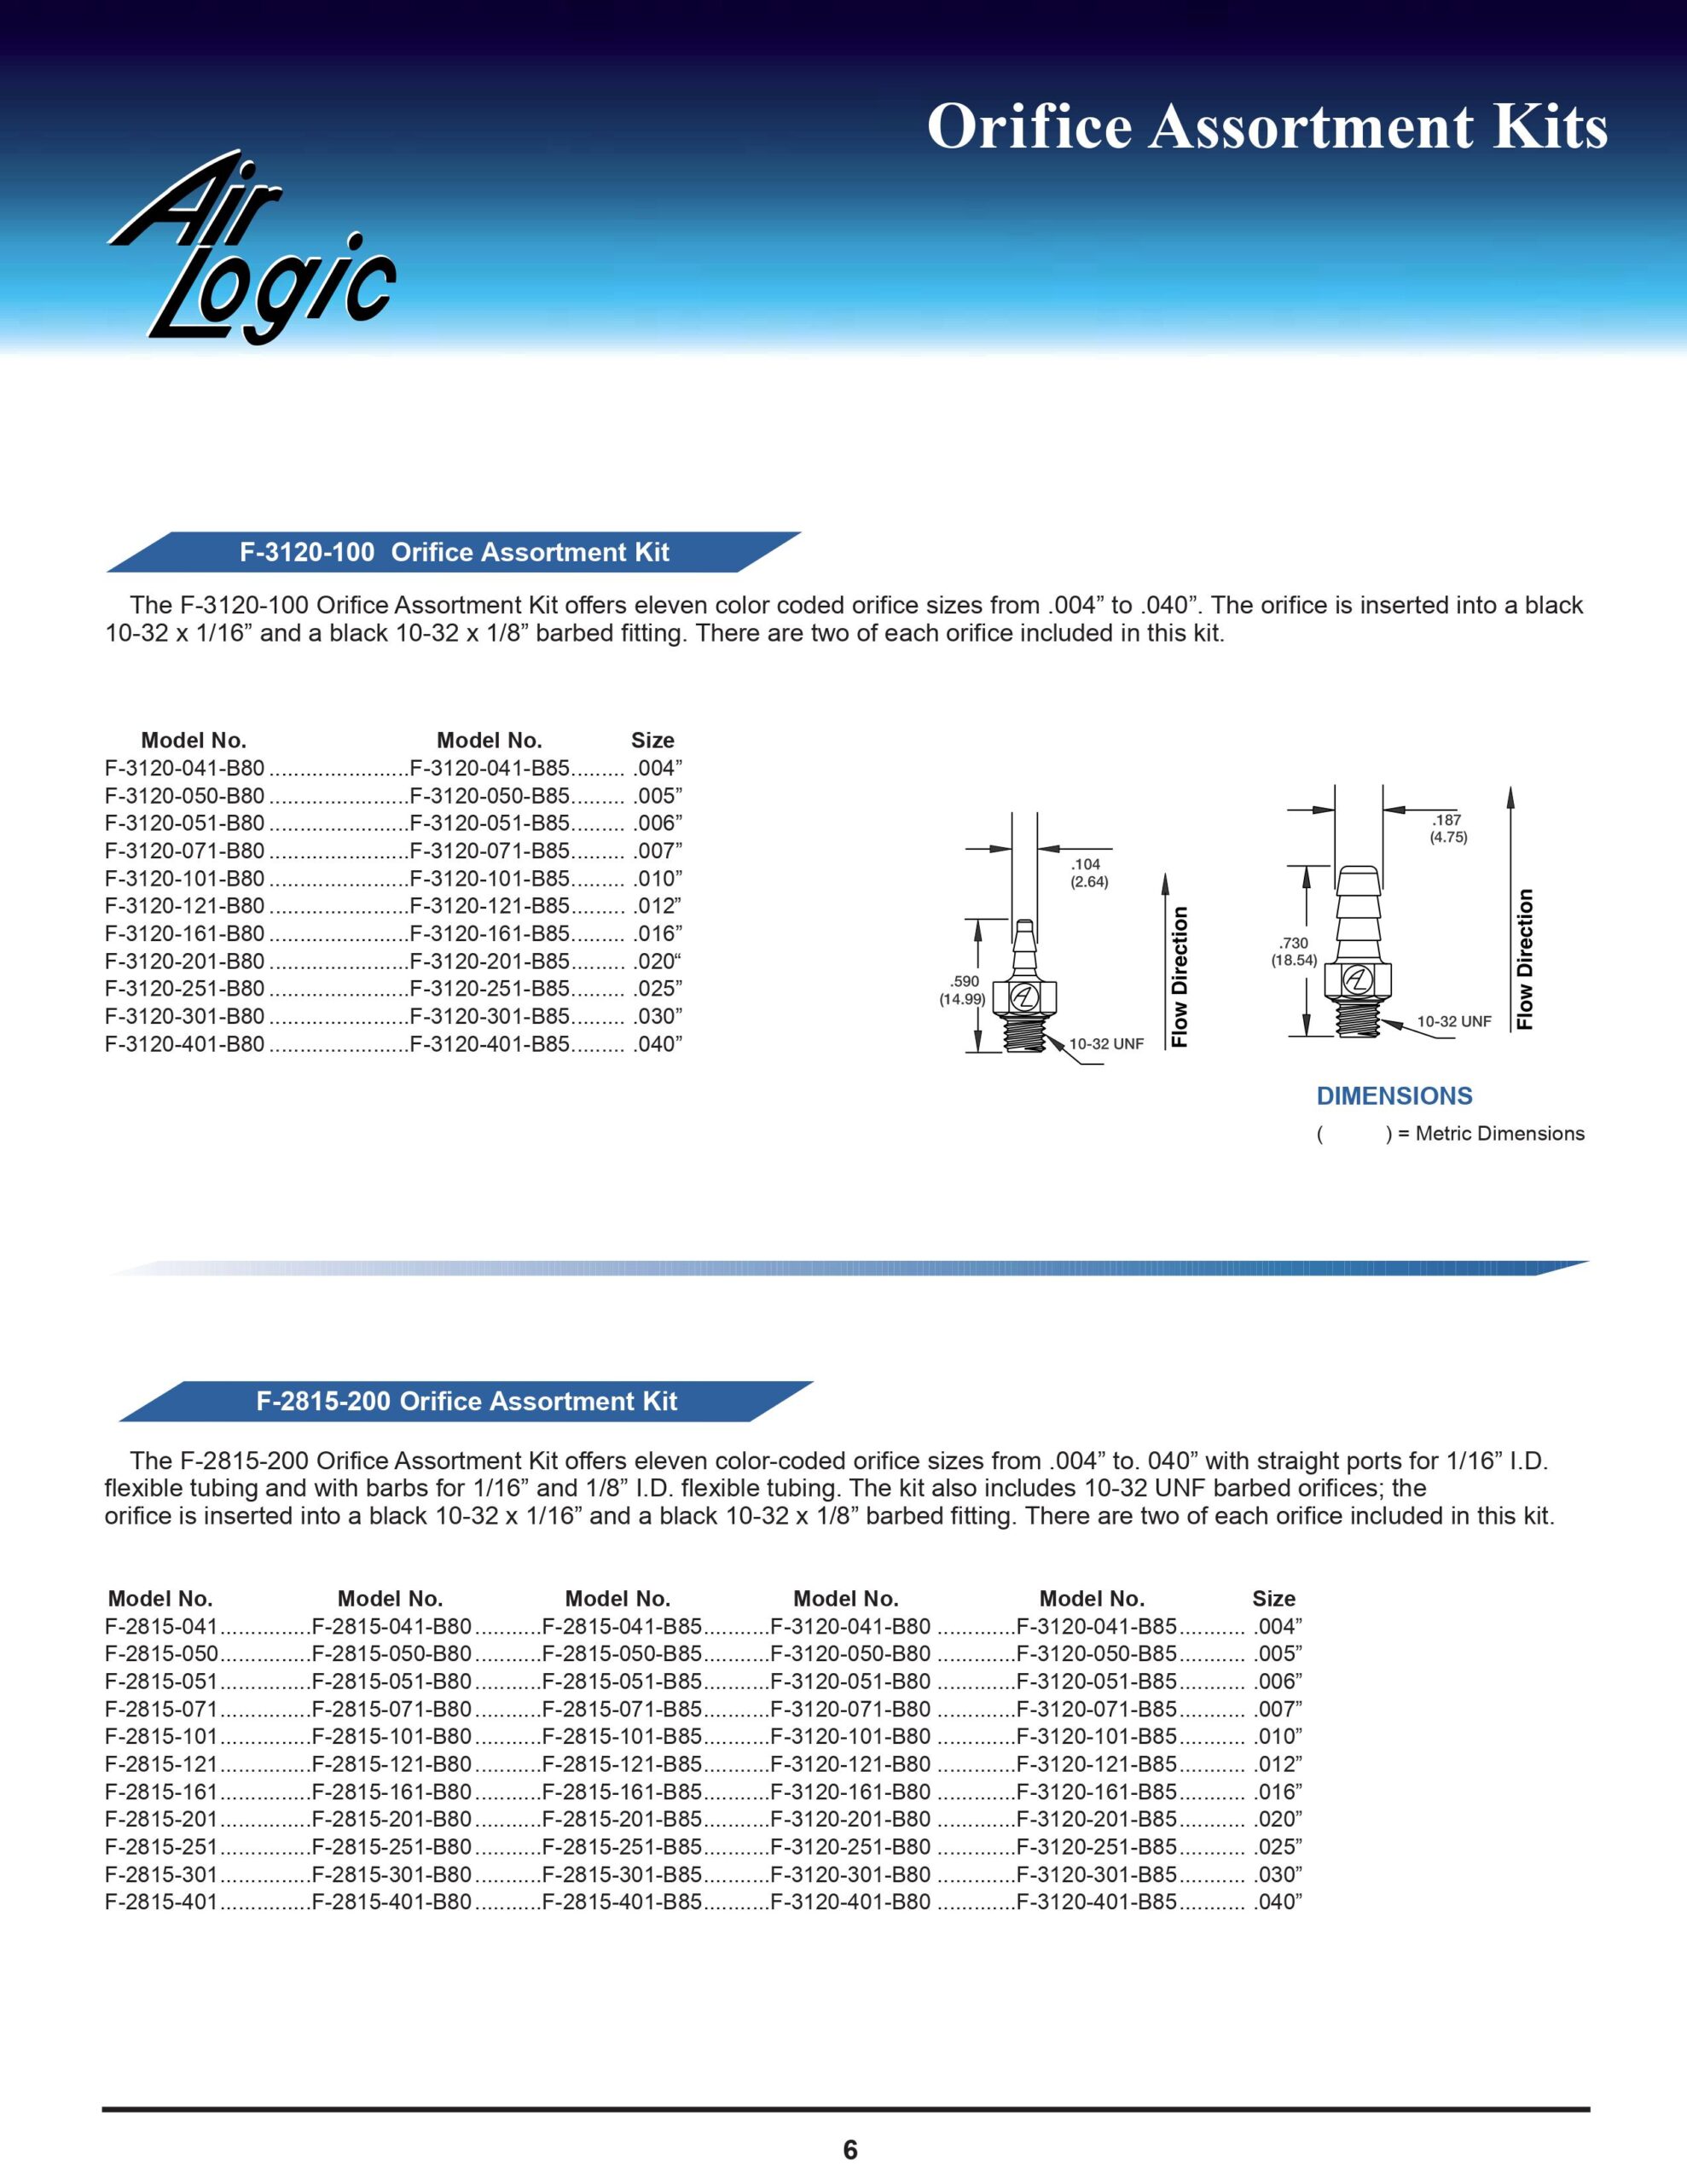 Airlogic Part F-2815-161-B80 0.016, barbs for 1/16 I.D. tubing 